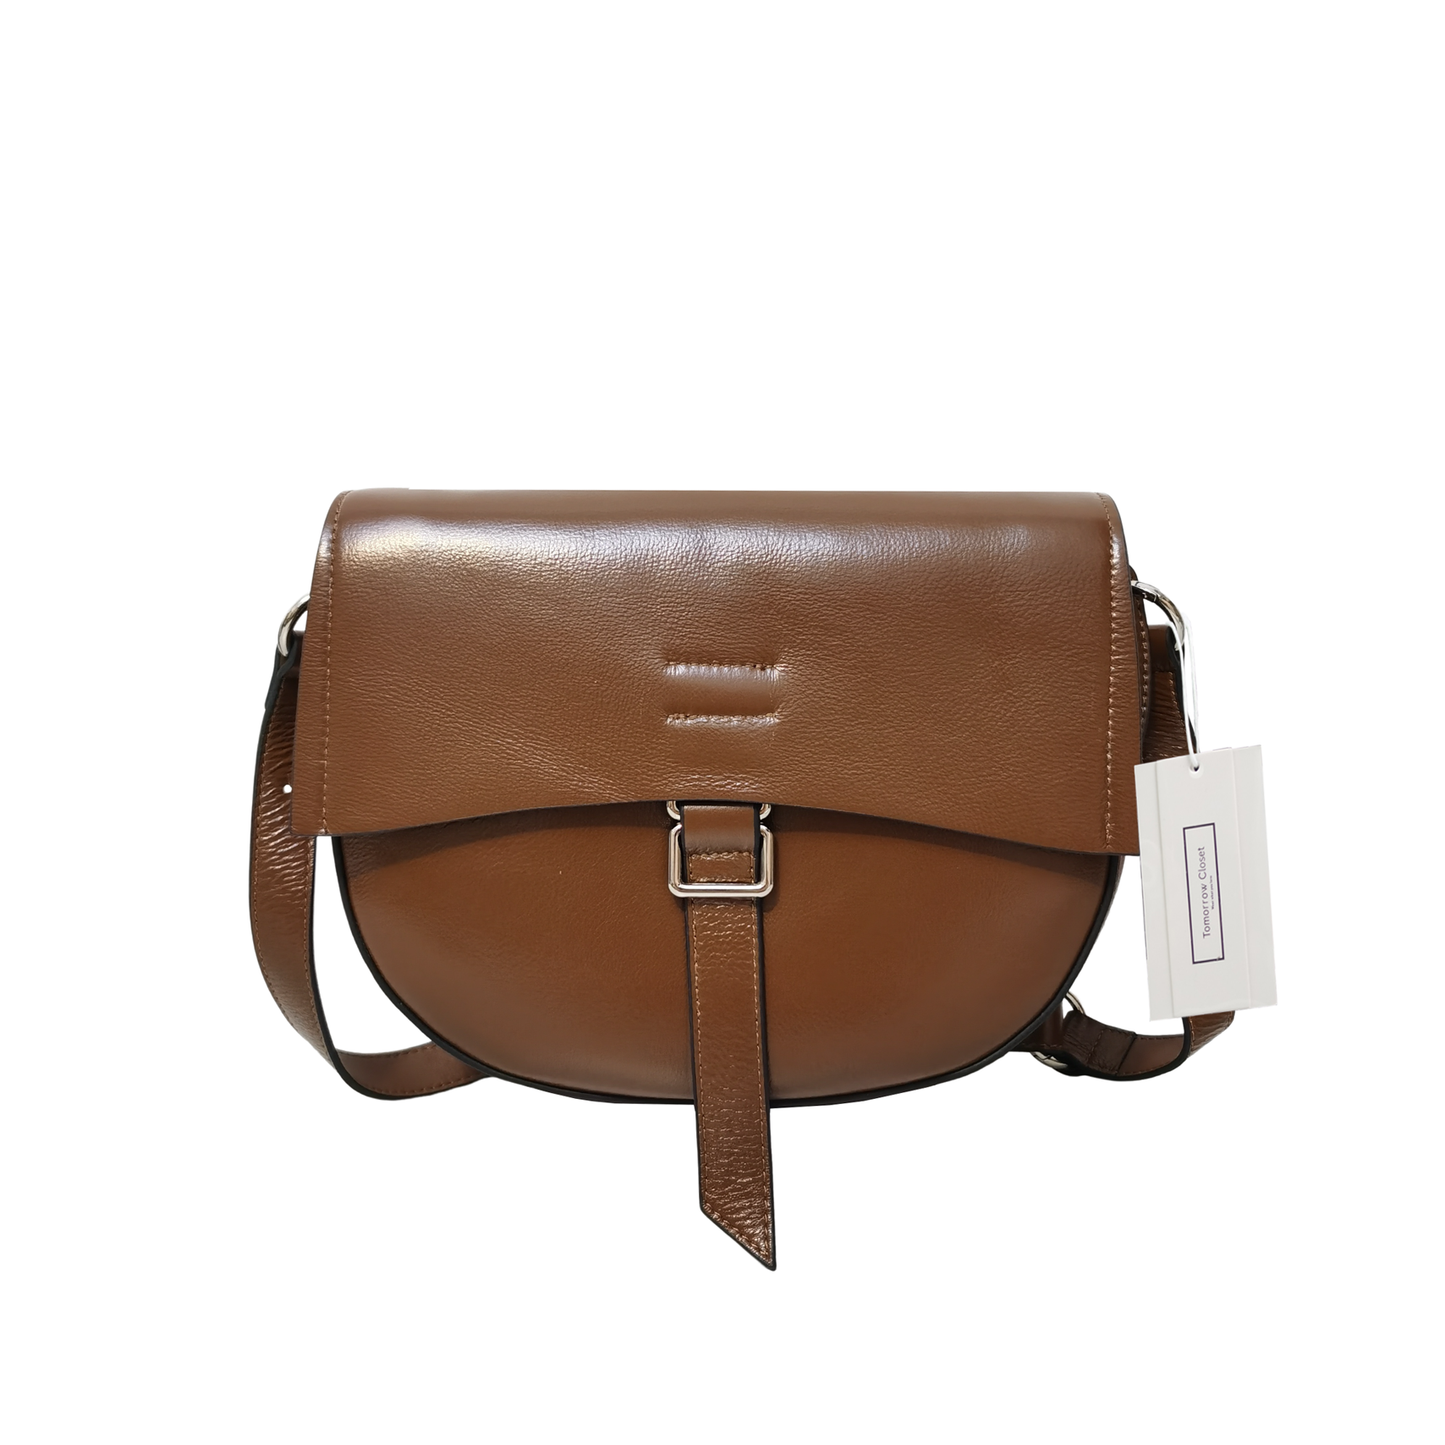 Women's genuine cowhide leather saddle handbag Edgar V4 design